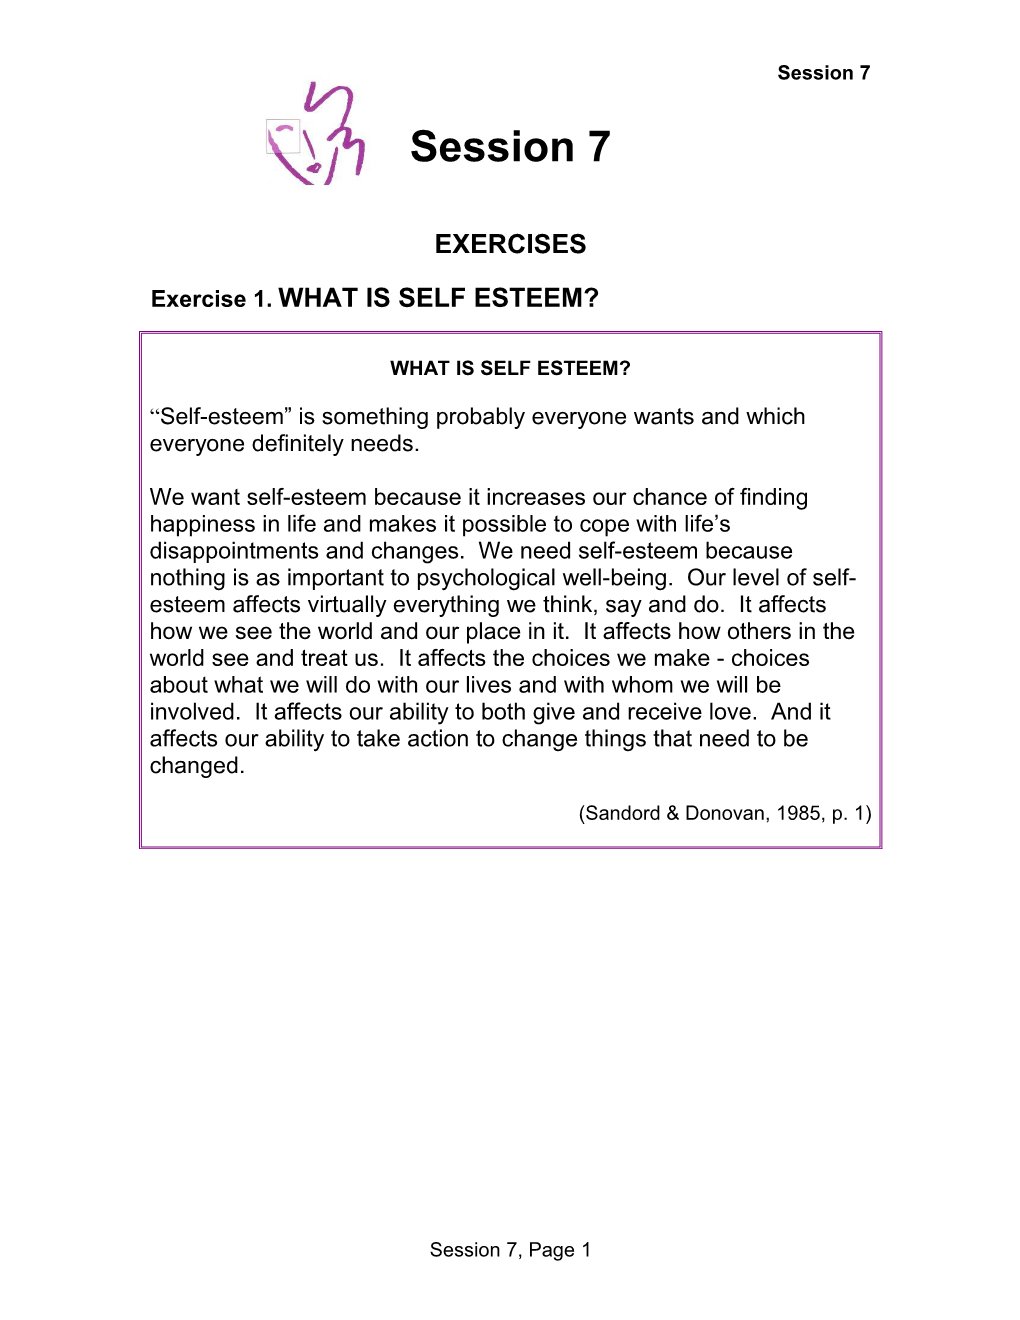 Exercise 1. WHAT IS SELF ESTEEM?